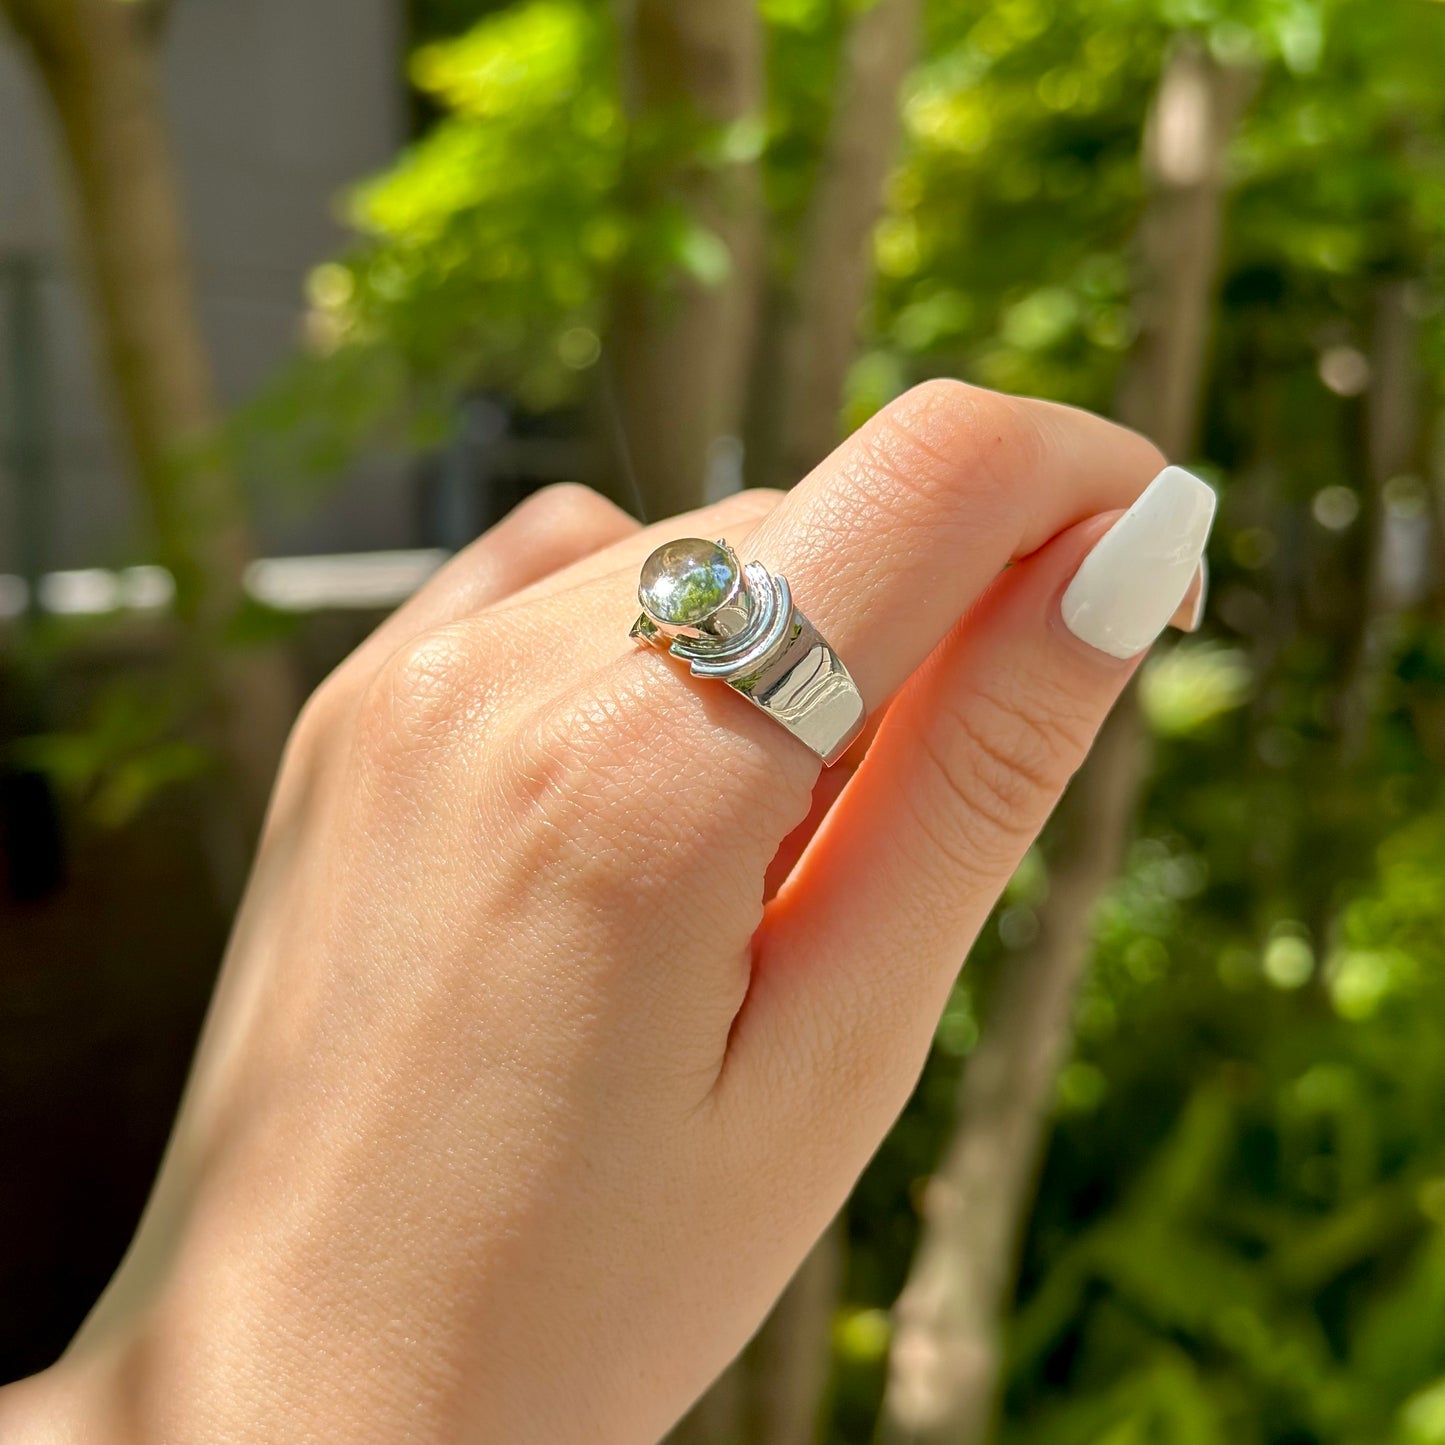 Nagoya limited ring